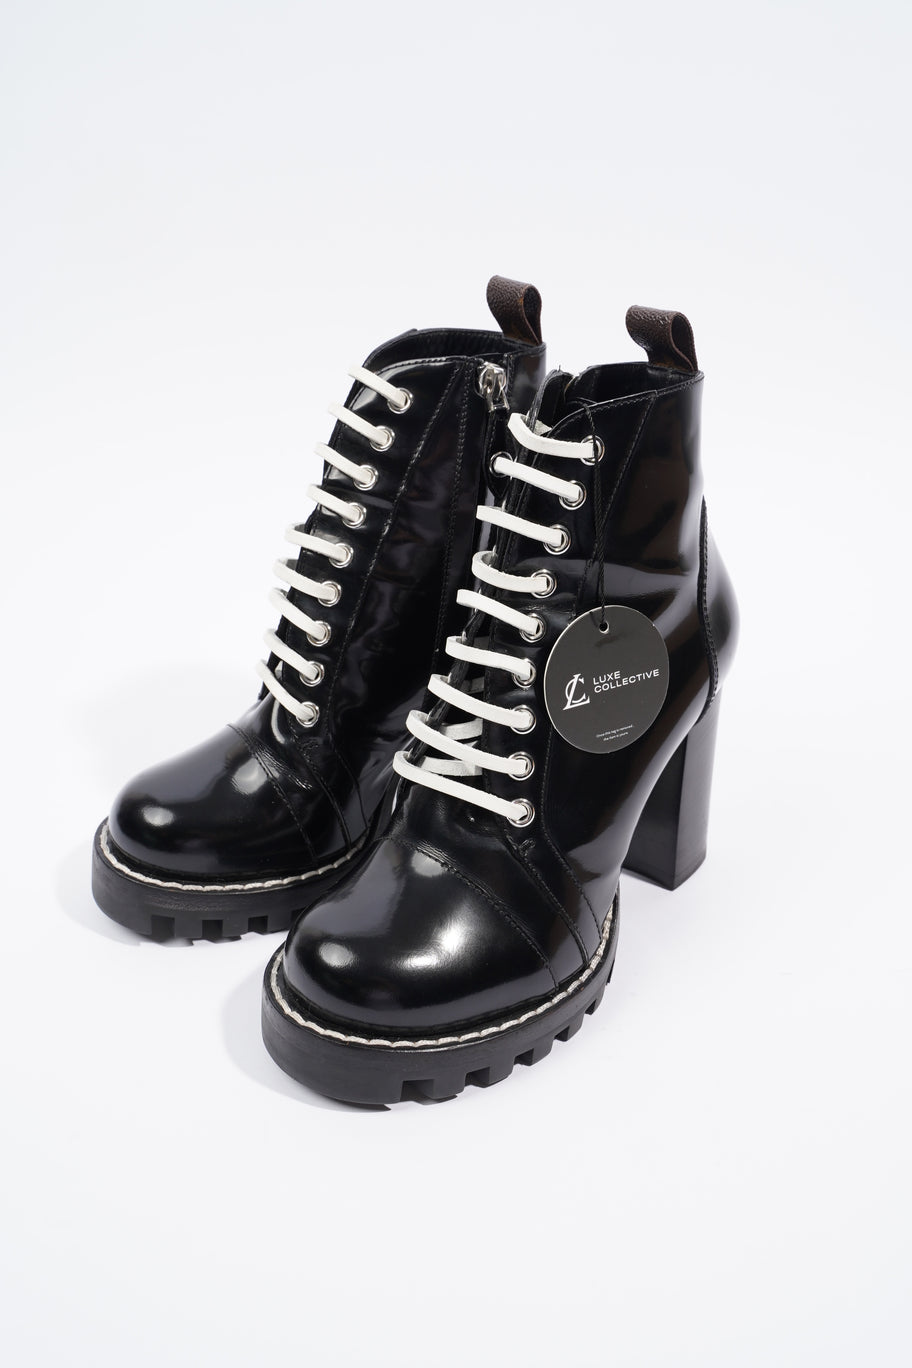 Louis Vuitton Star Trail Ankle Boot Patent Black EU 36 / UK 3 Image 9